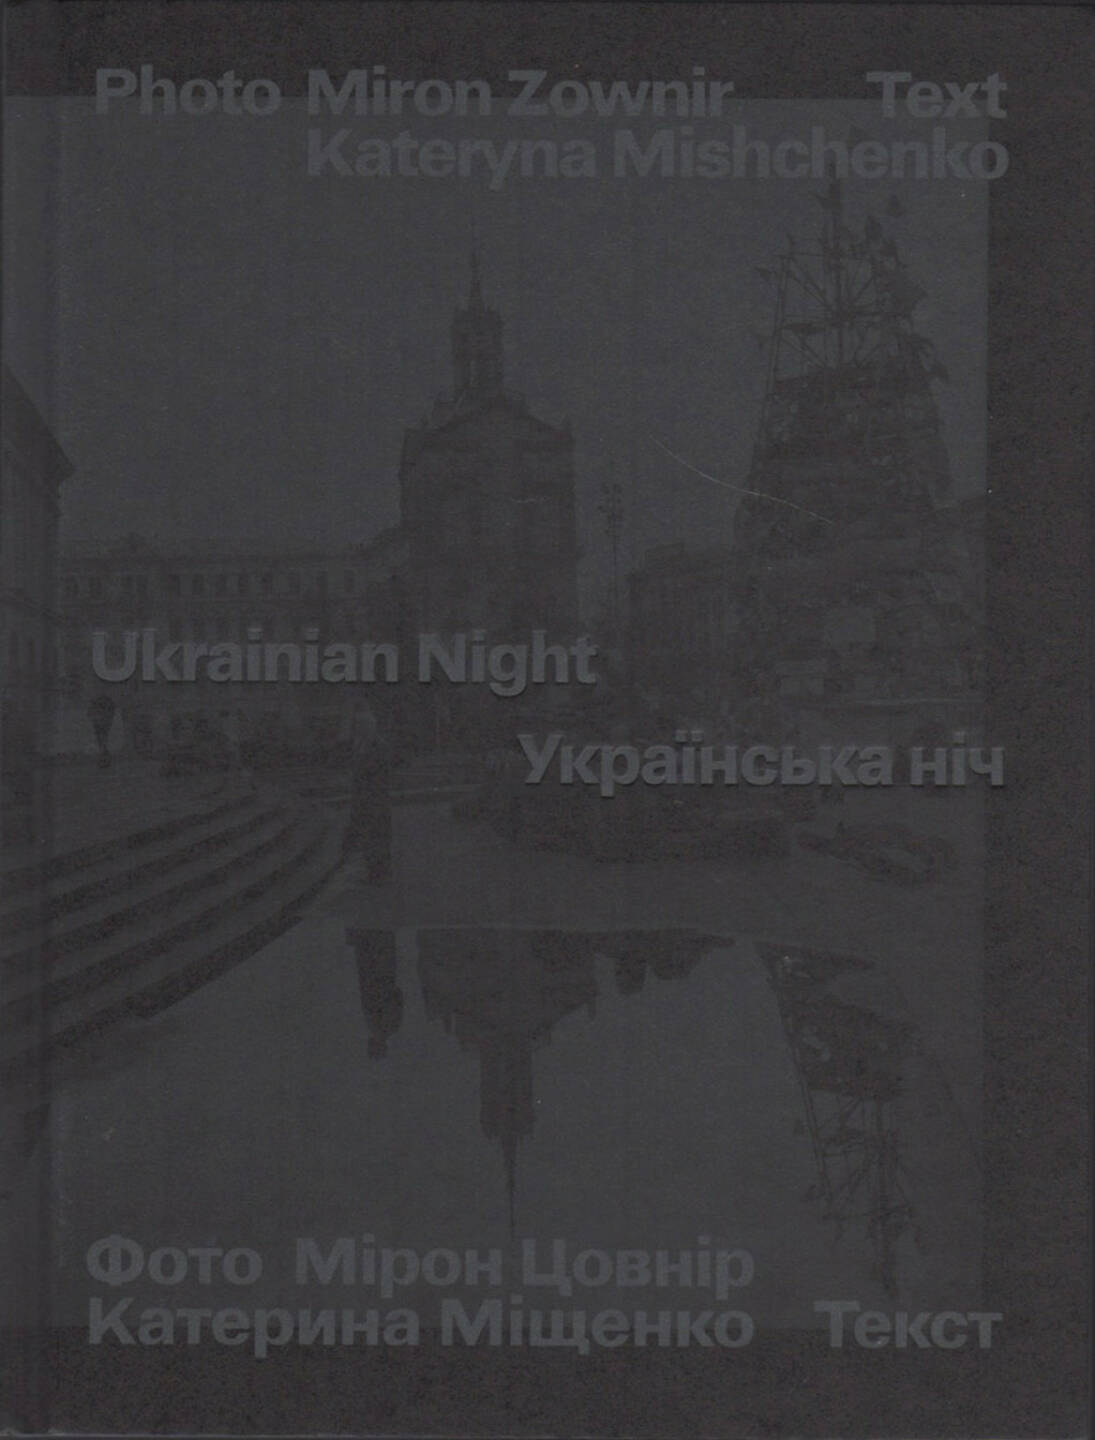 Kateryna Mishchenko & Miron Zownir - Ukrainian Night, Spector Books 2015, Cover - http://josefchladek.com/book/kateryna_mishchenko_miron_zownir_-_ukrainian_night